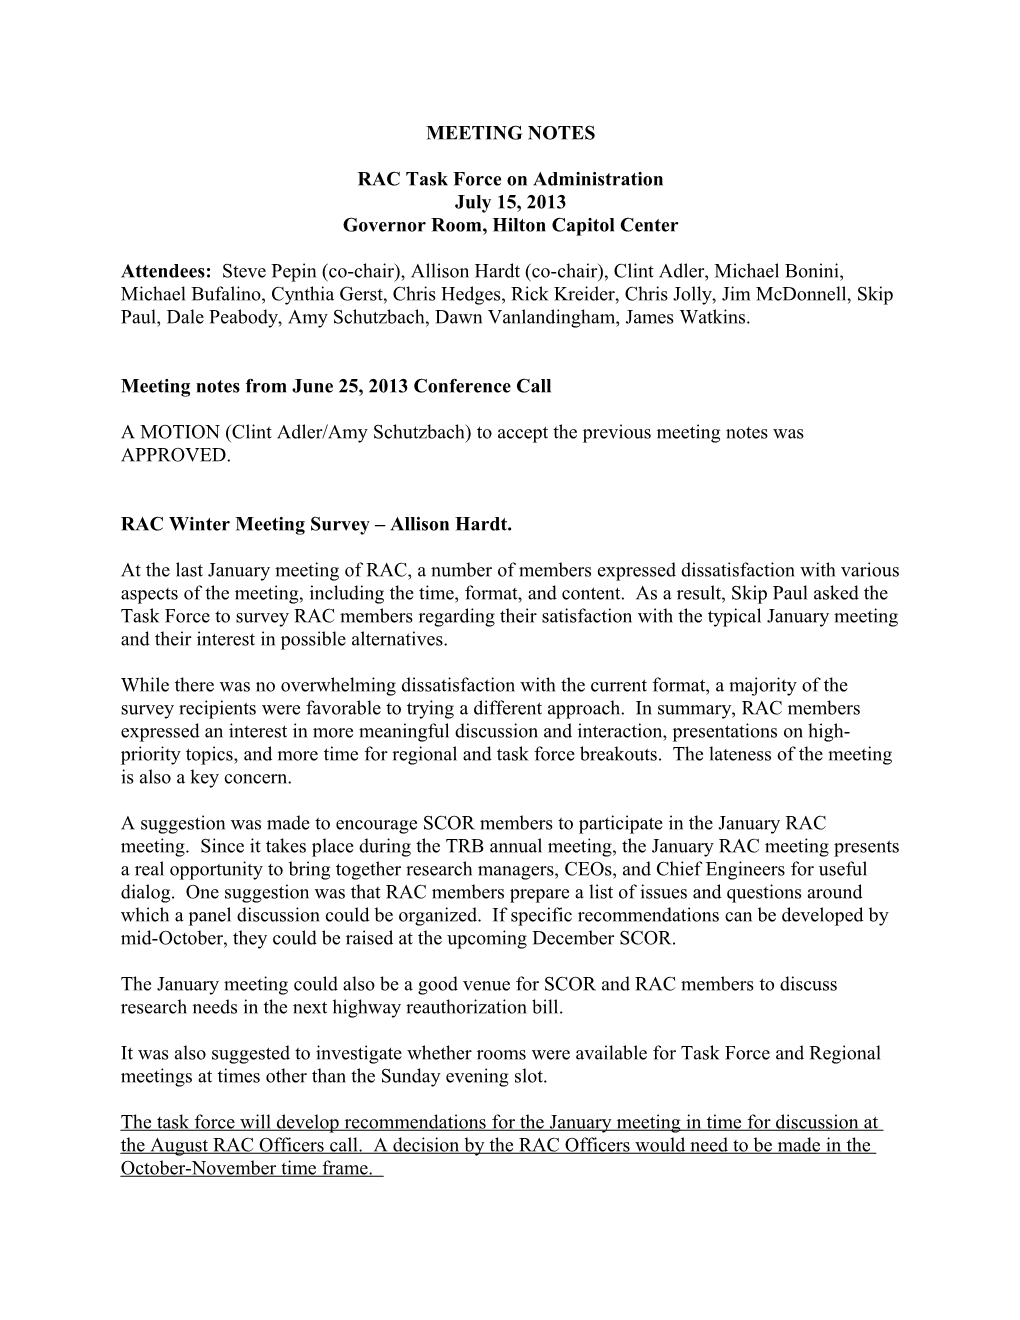 Admin TF Meeting Notes: July 15, 2013